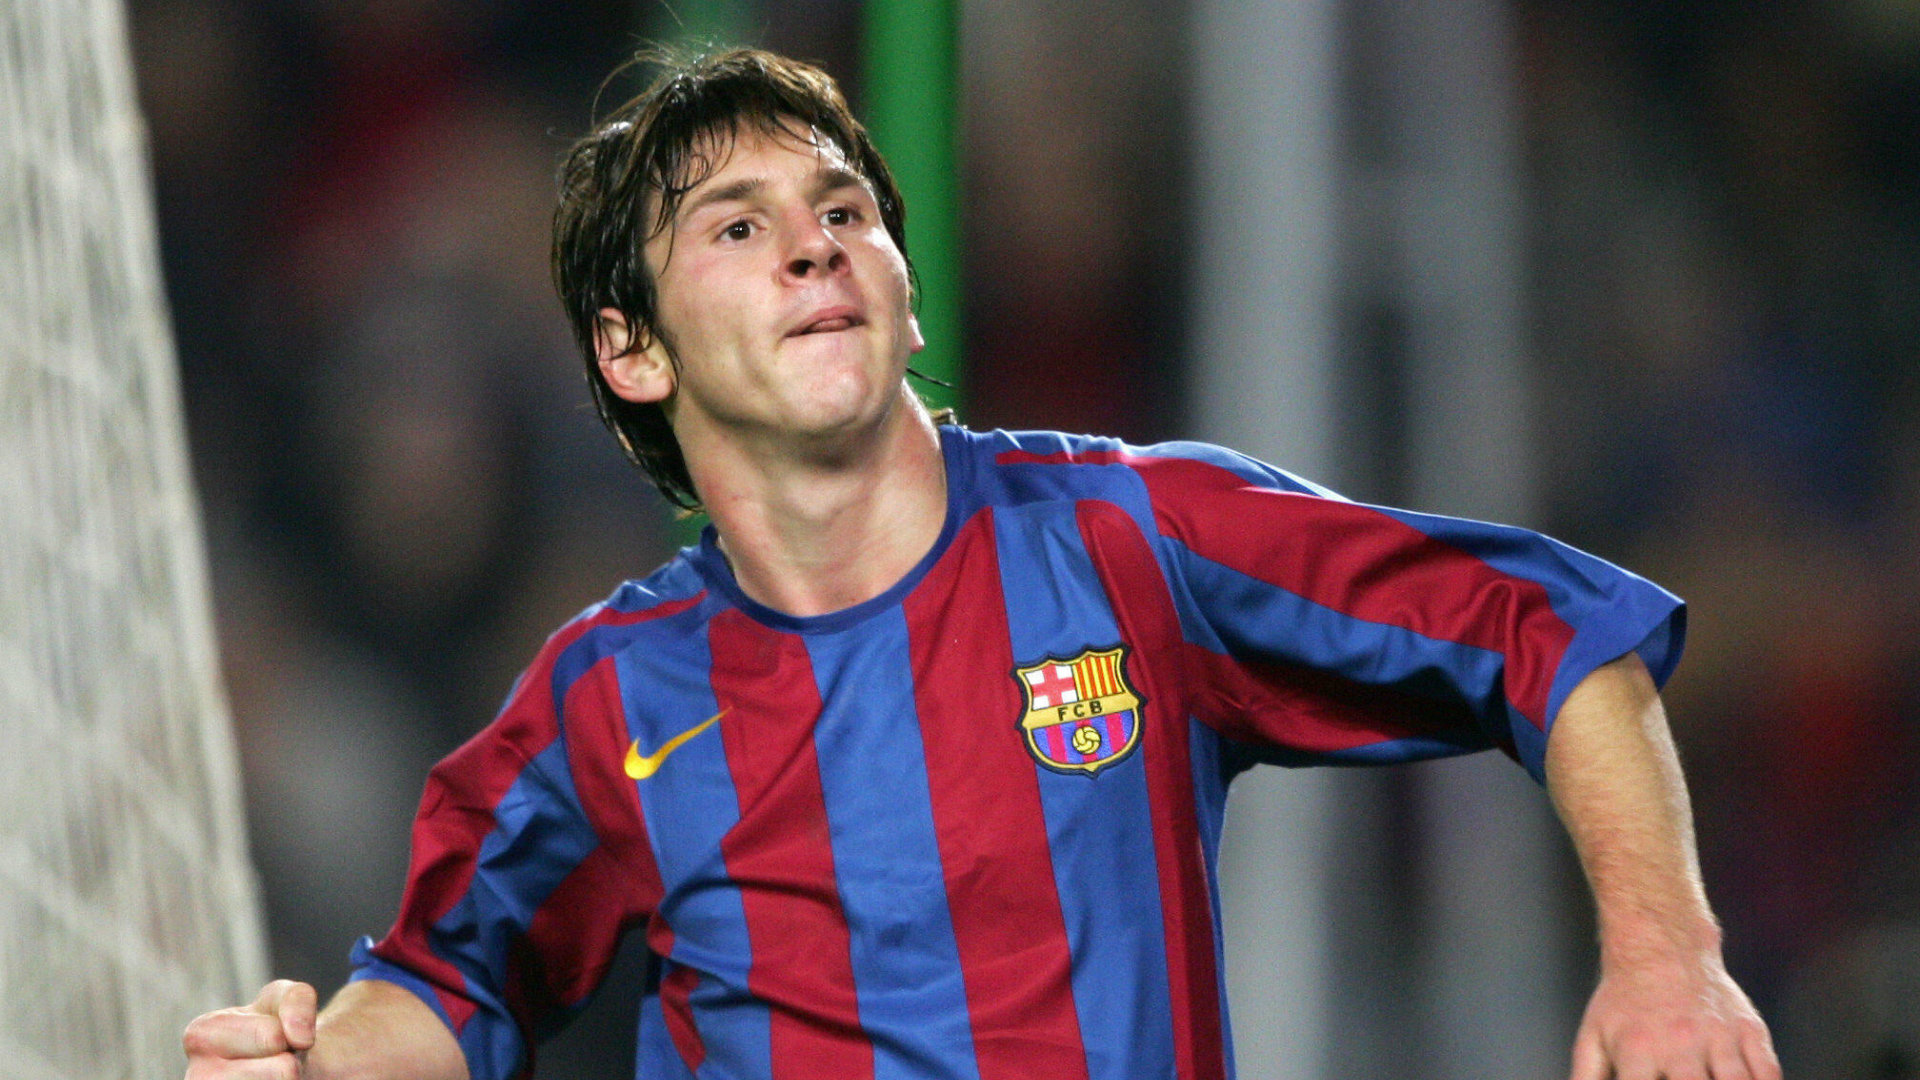 Tại sao gọi Messi là El Pulga